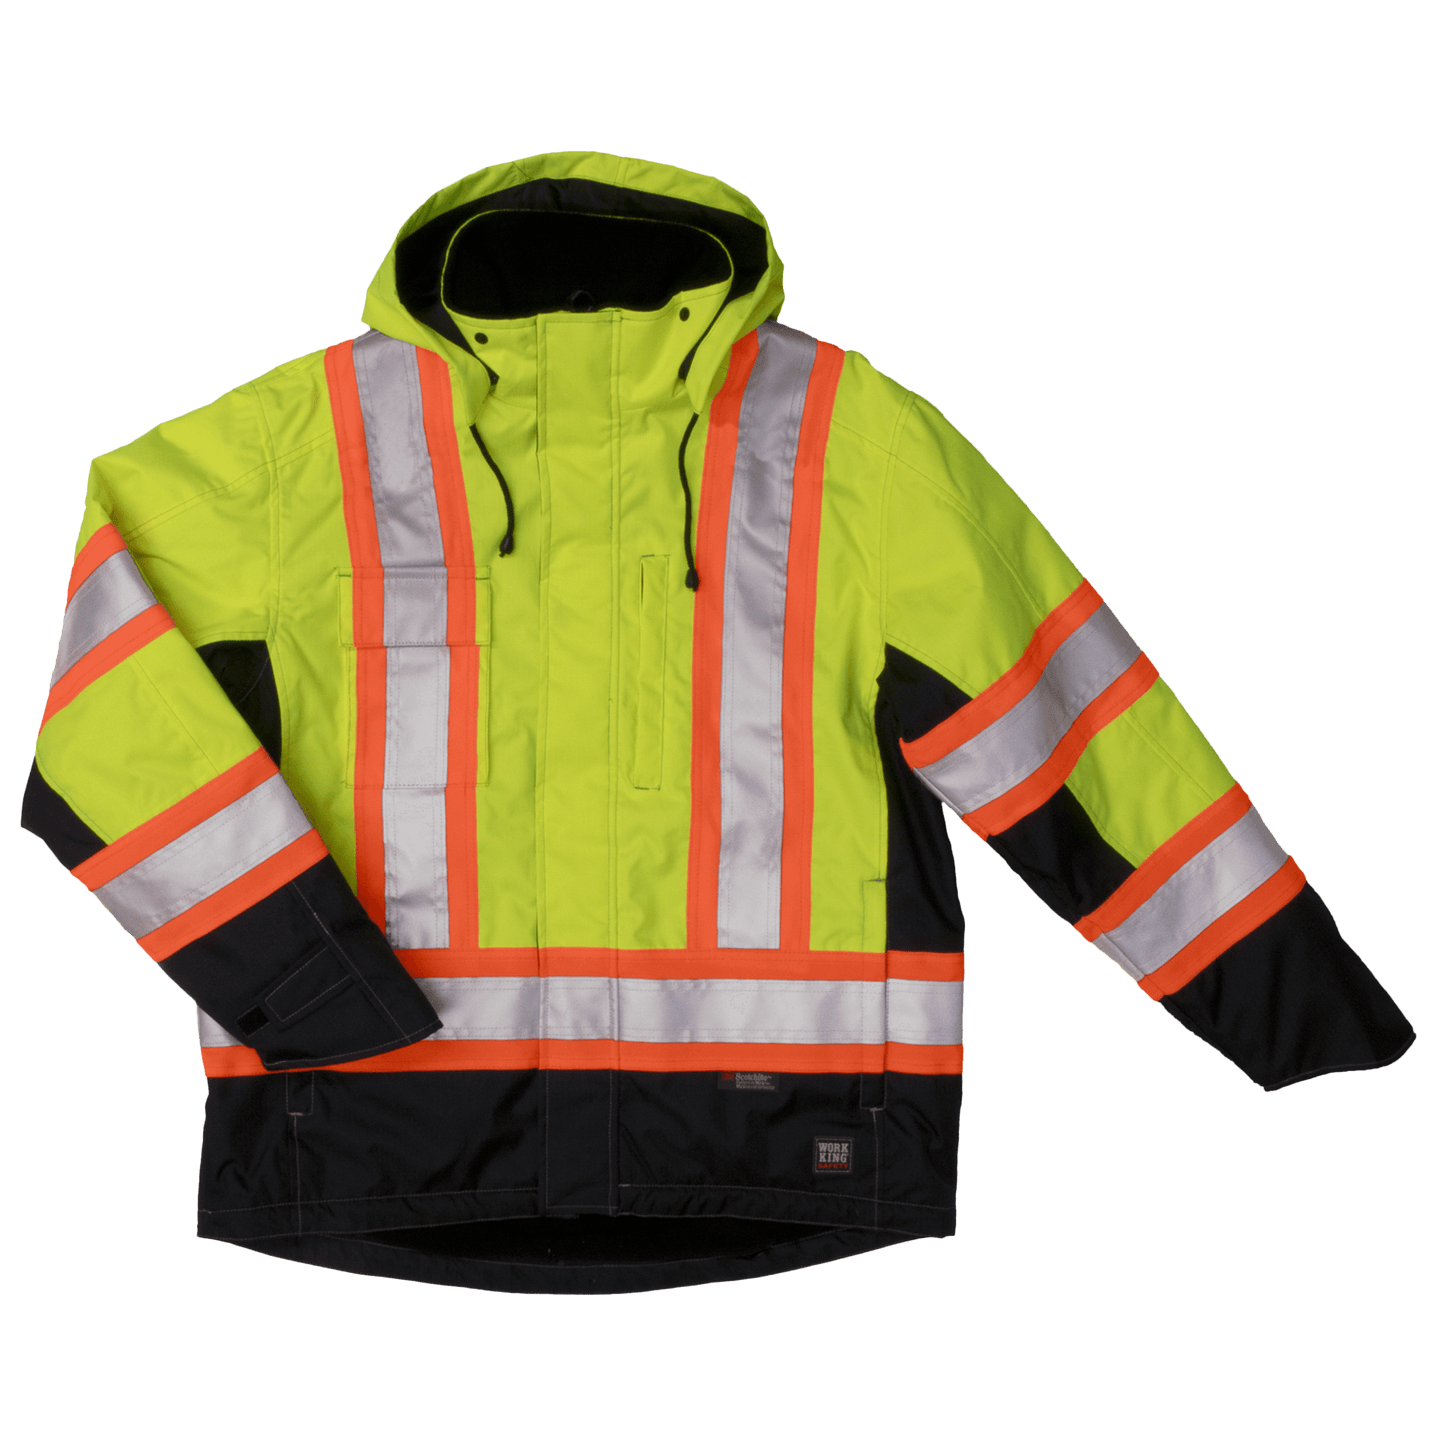 Tough Duck Fleece Lined Safety Jacket - S245 - Fluorescent Green